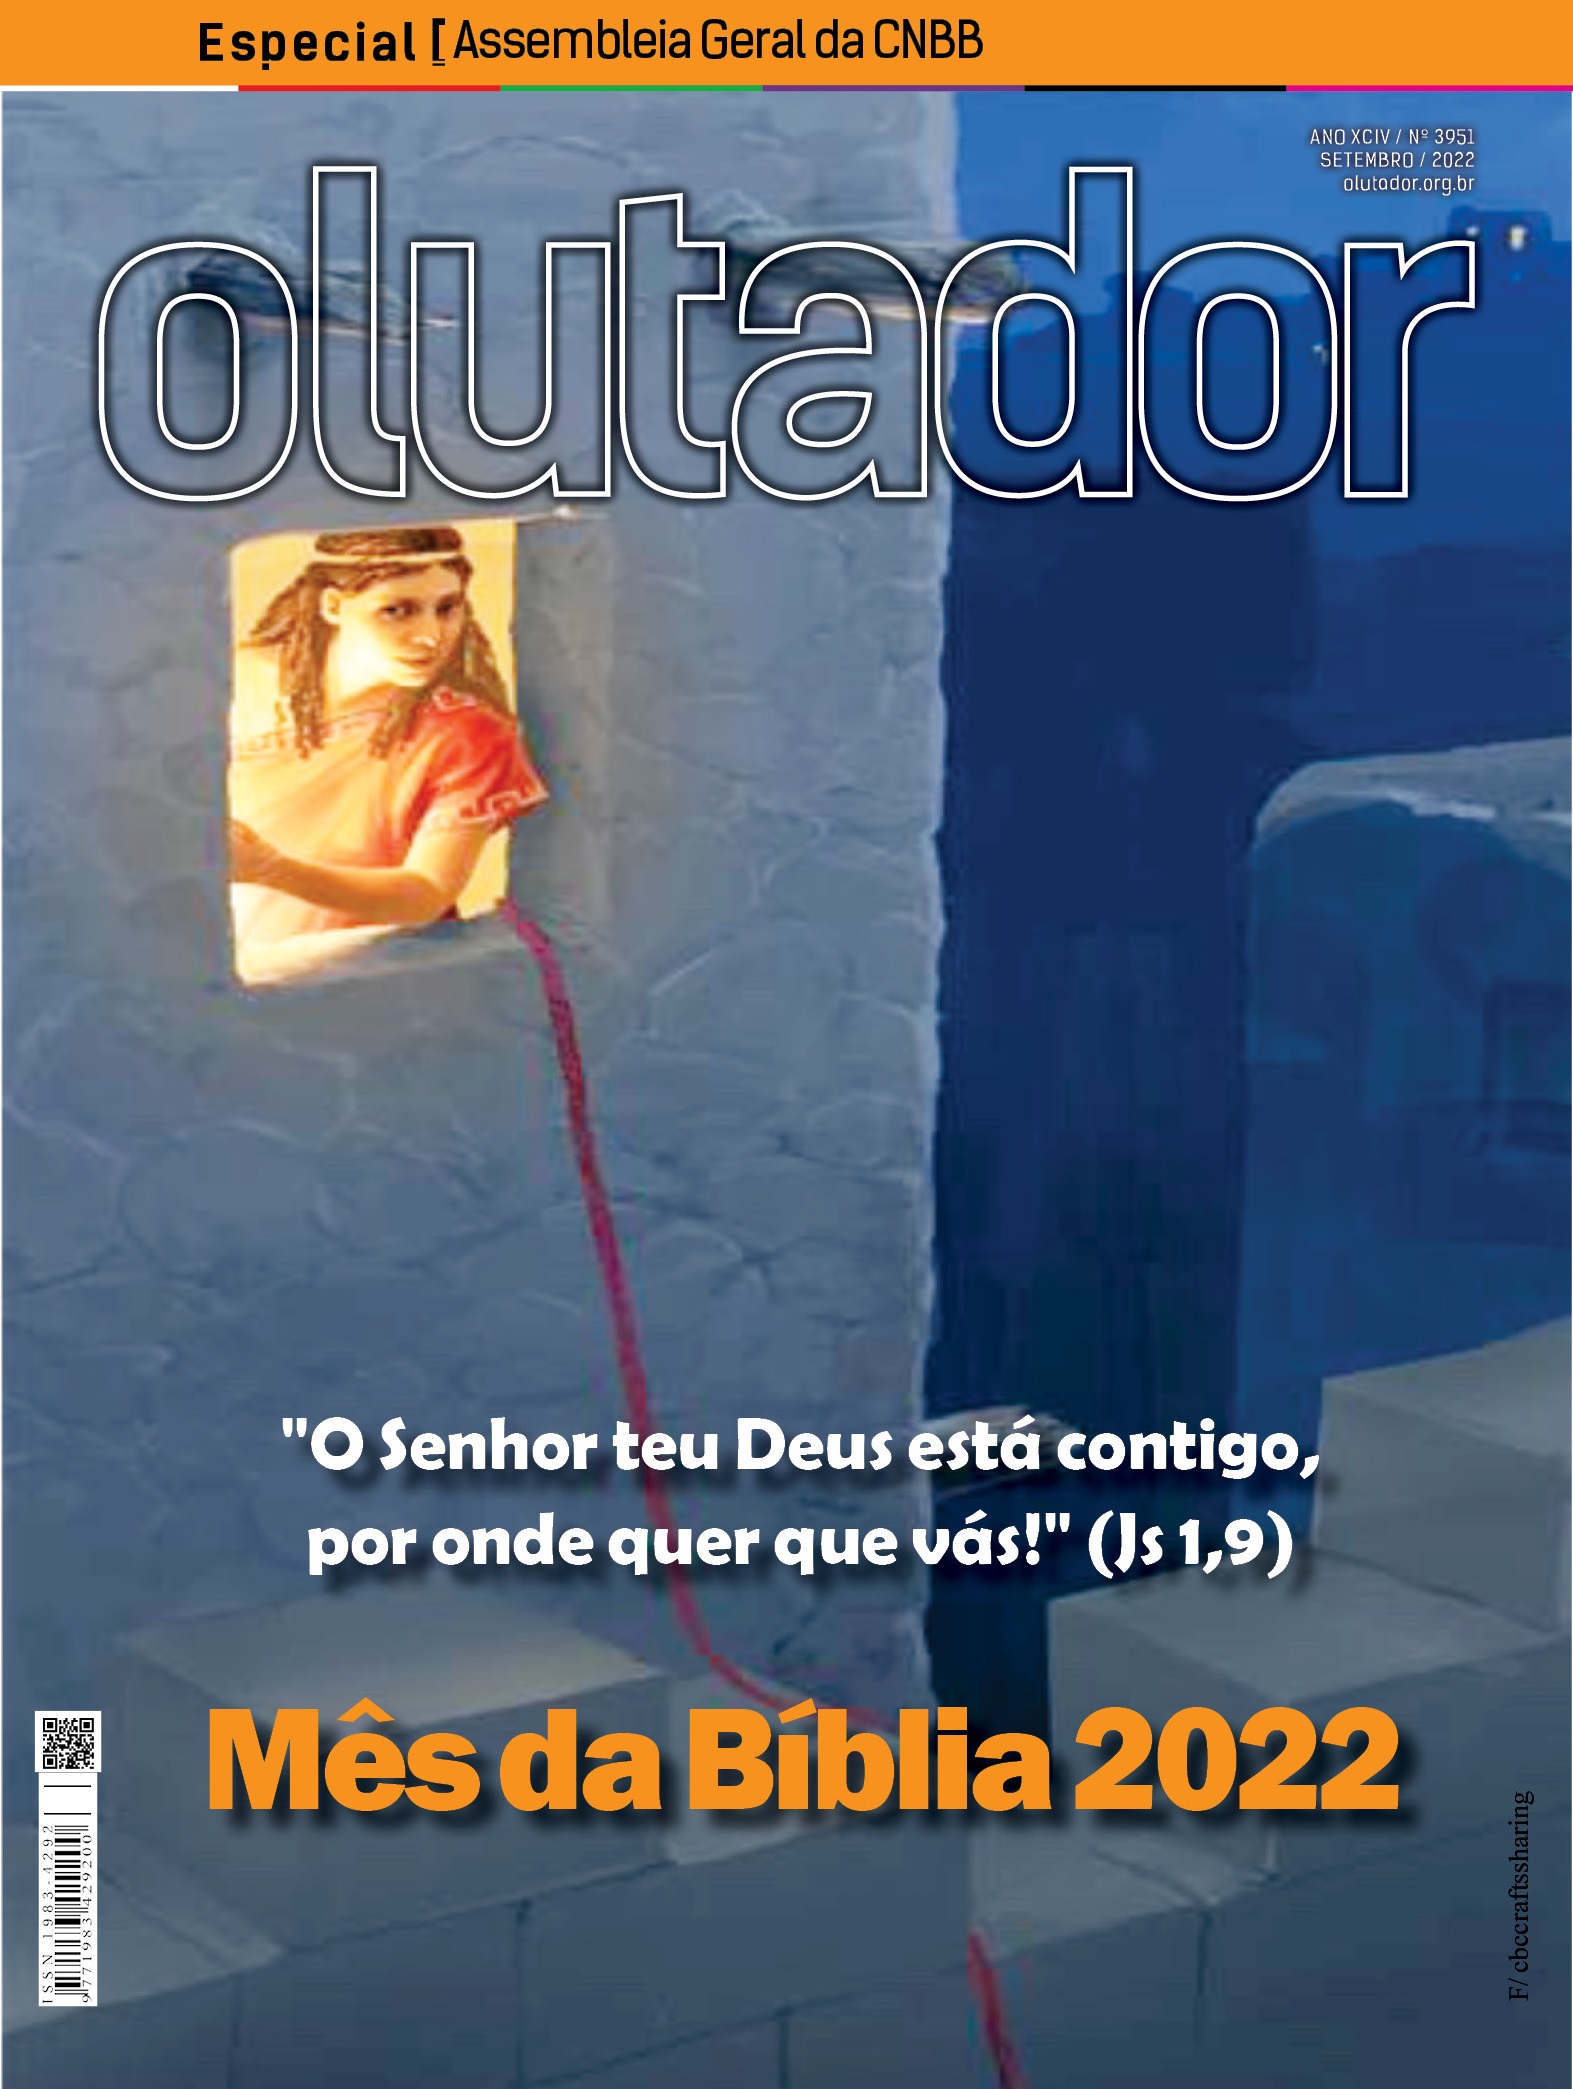 Mês da Bíblia 2022